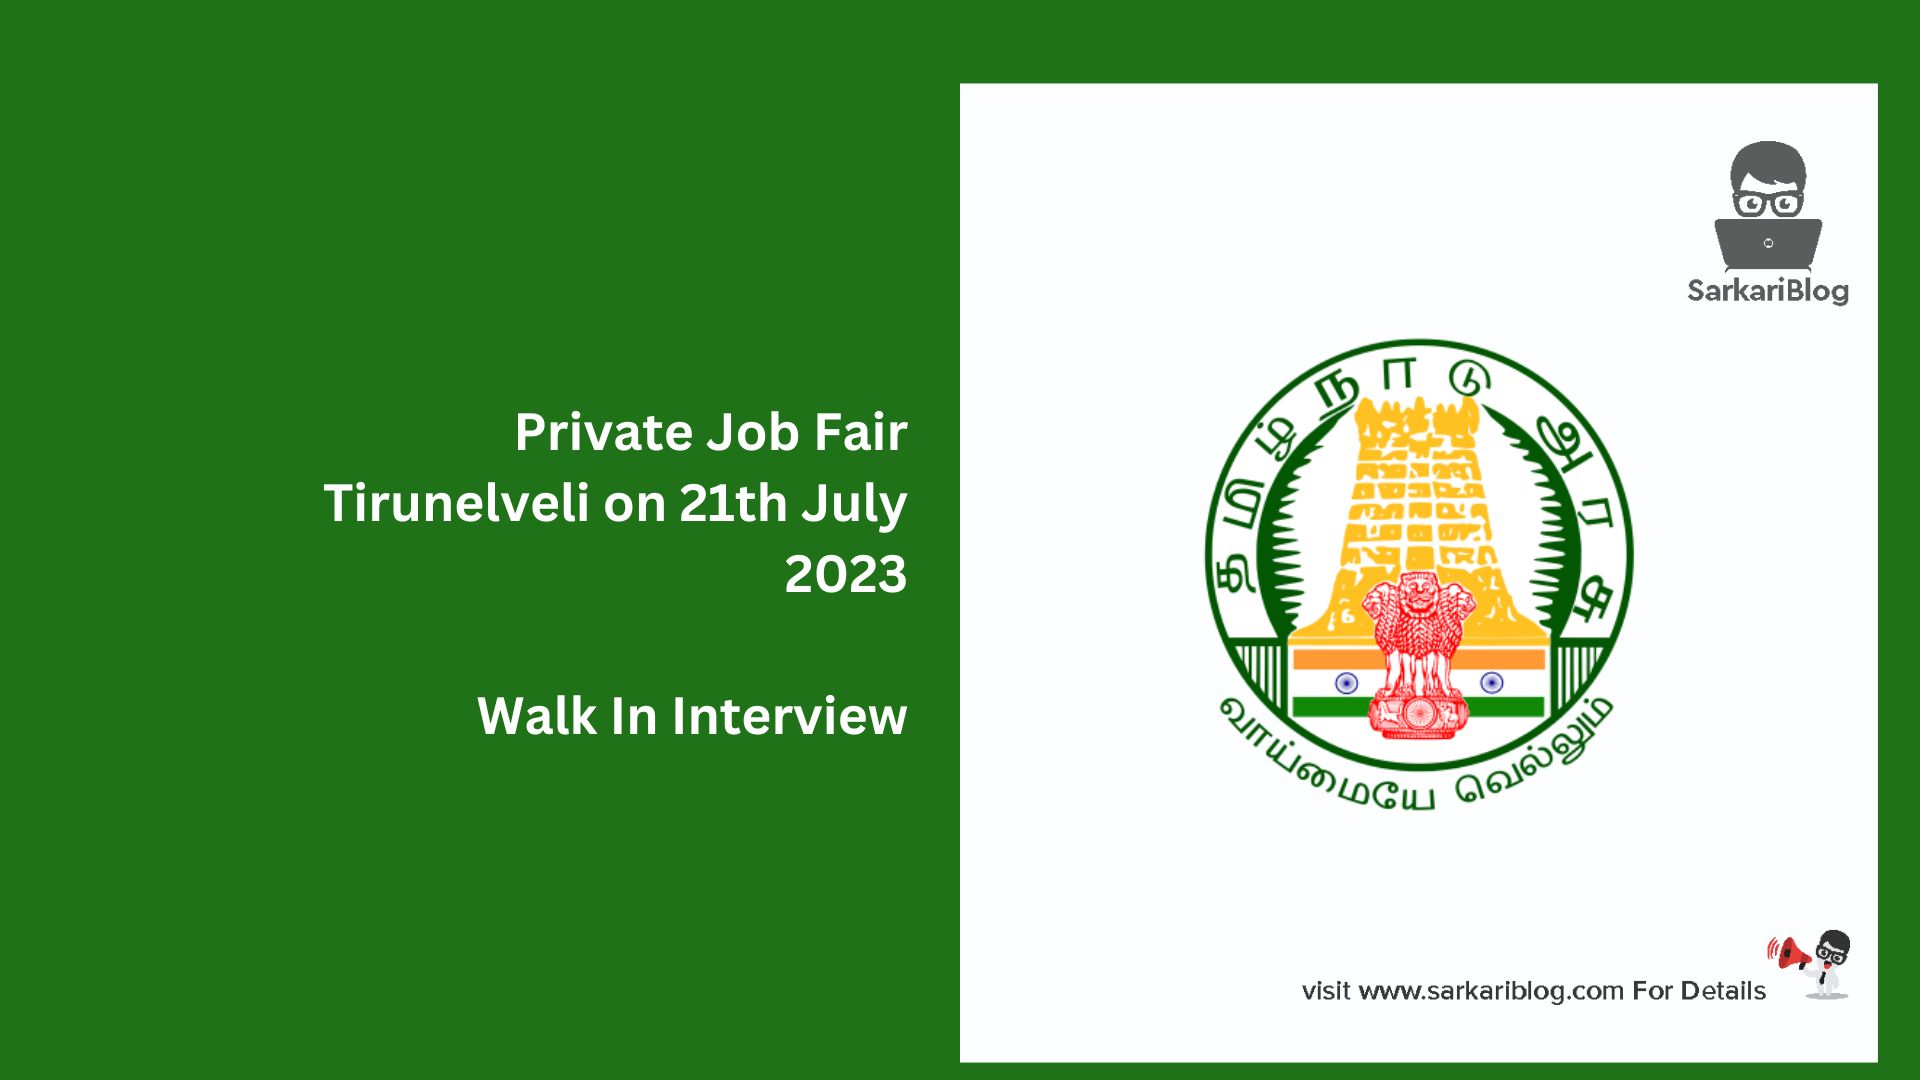 Private Job Fair Tirunelveli on 21st July 2023